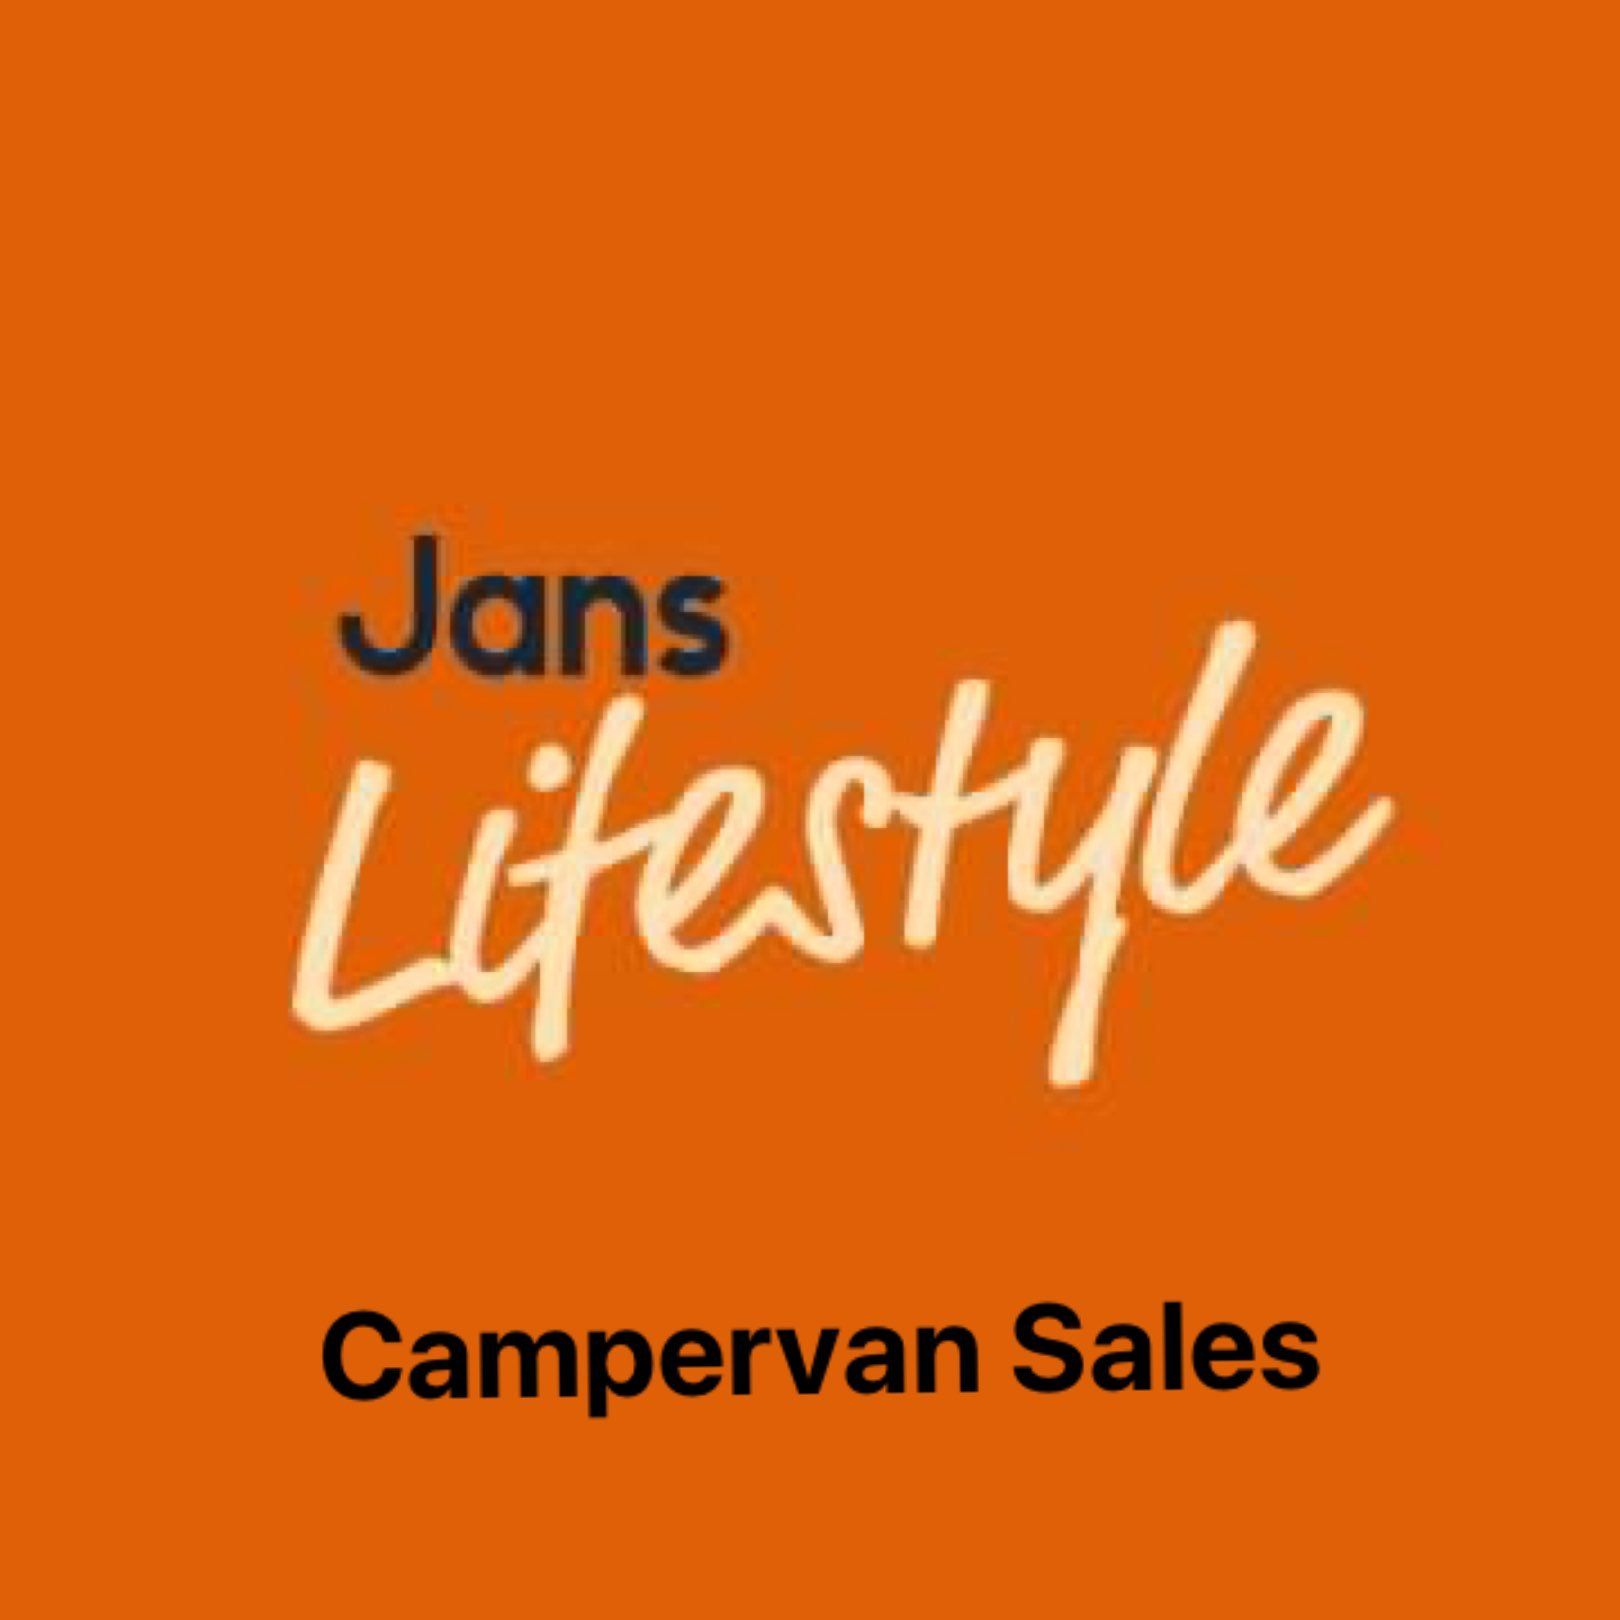 JANS Lifestyle Campervan Sales- CampingNI members discount